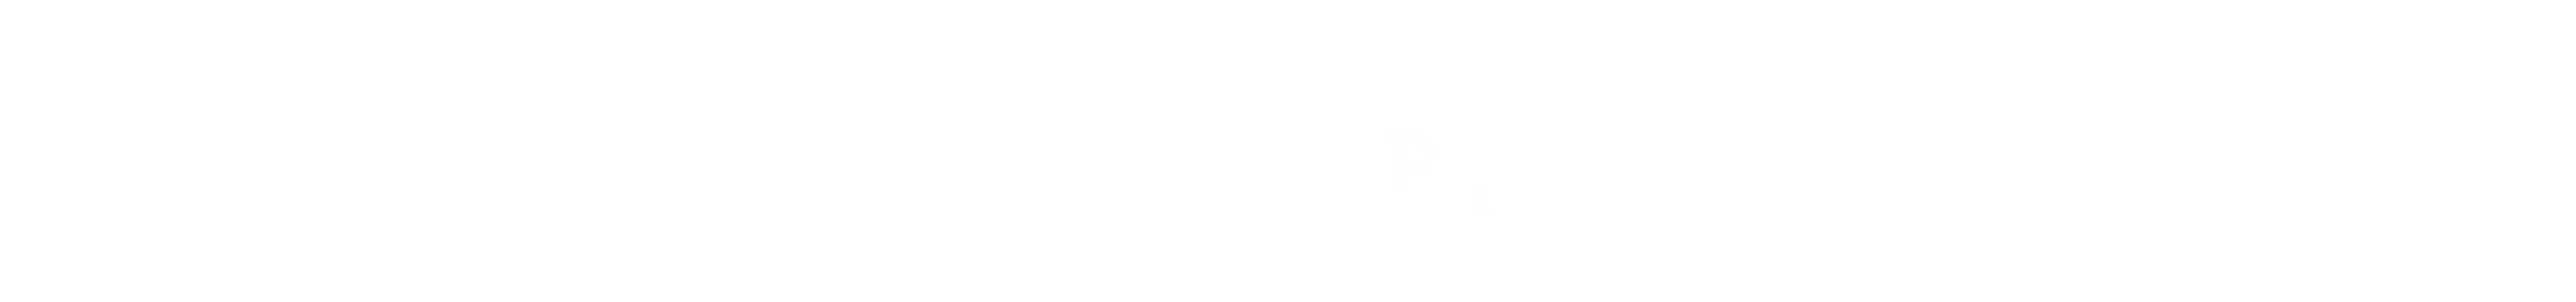 TCS - customers : Spaljisten,  BorgWarner, PVI Esskå, PVI, Segerström, Trivselhus